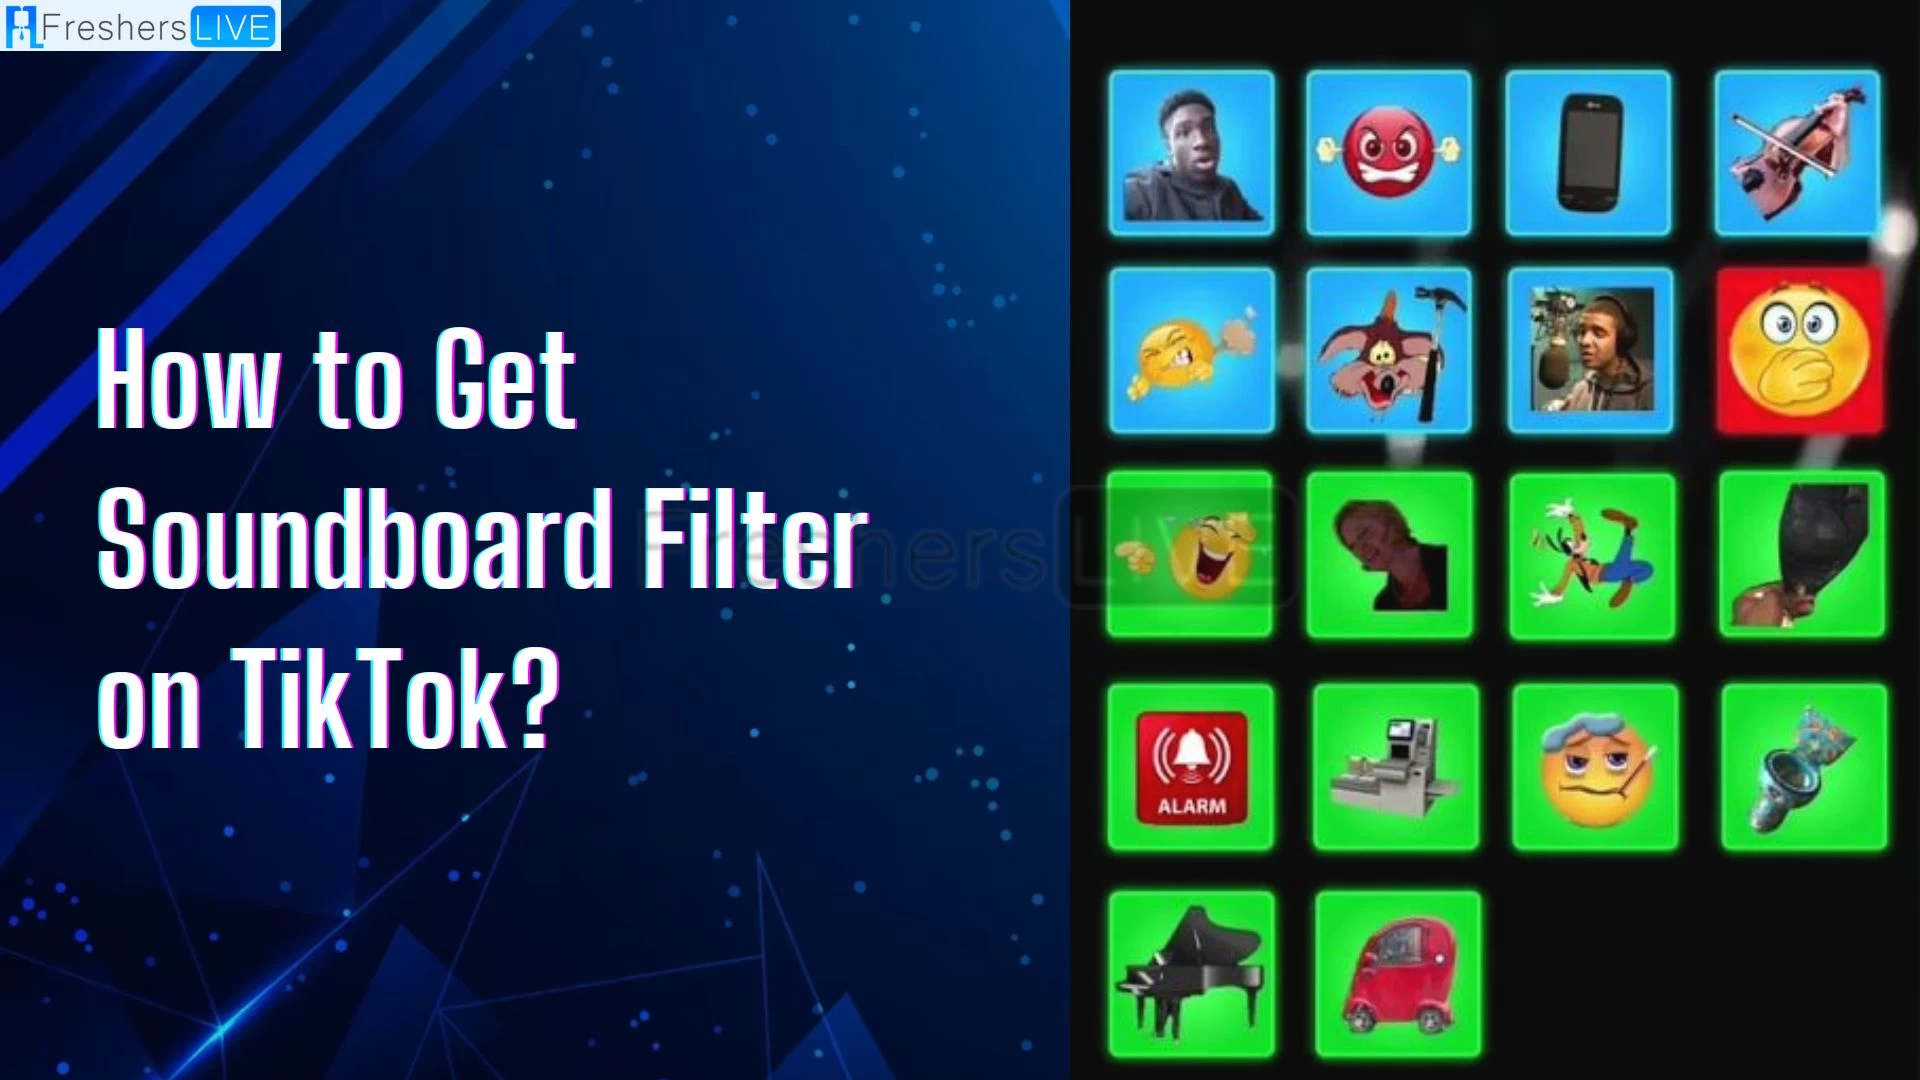 Tiktok Soundboard Filter, How to Get Soundboard Filter on Tiktok?